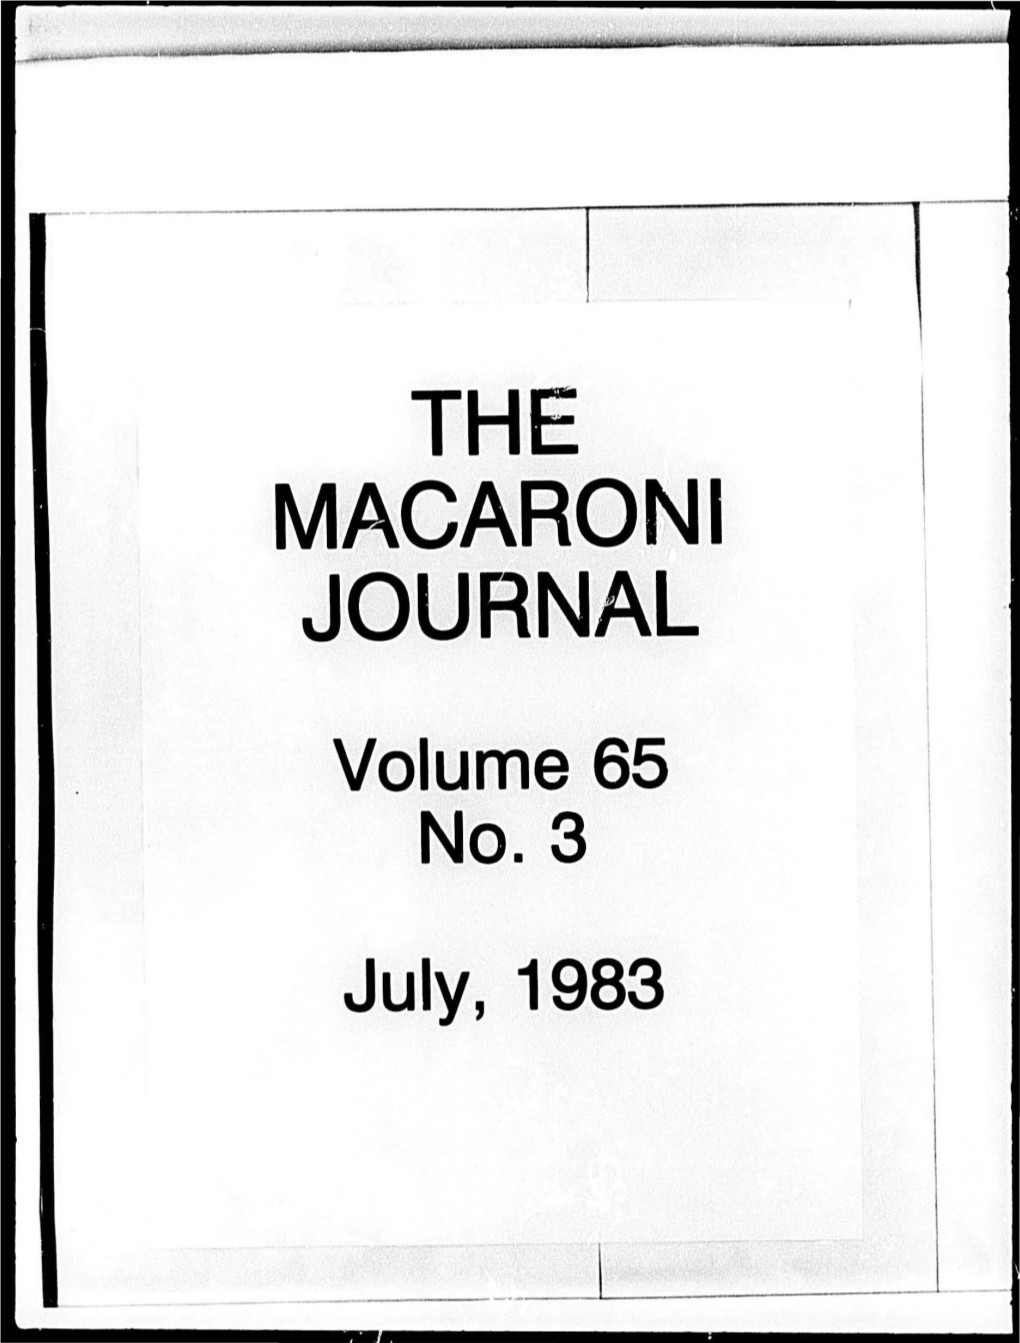 The Macaroni Journal